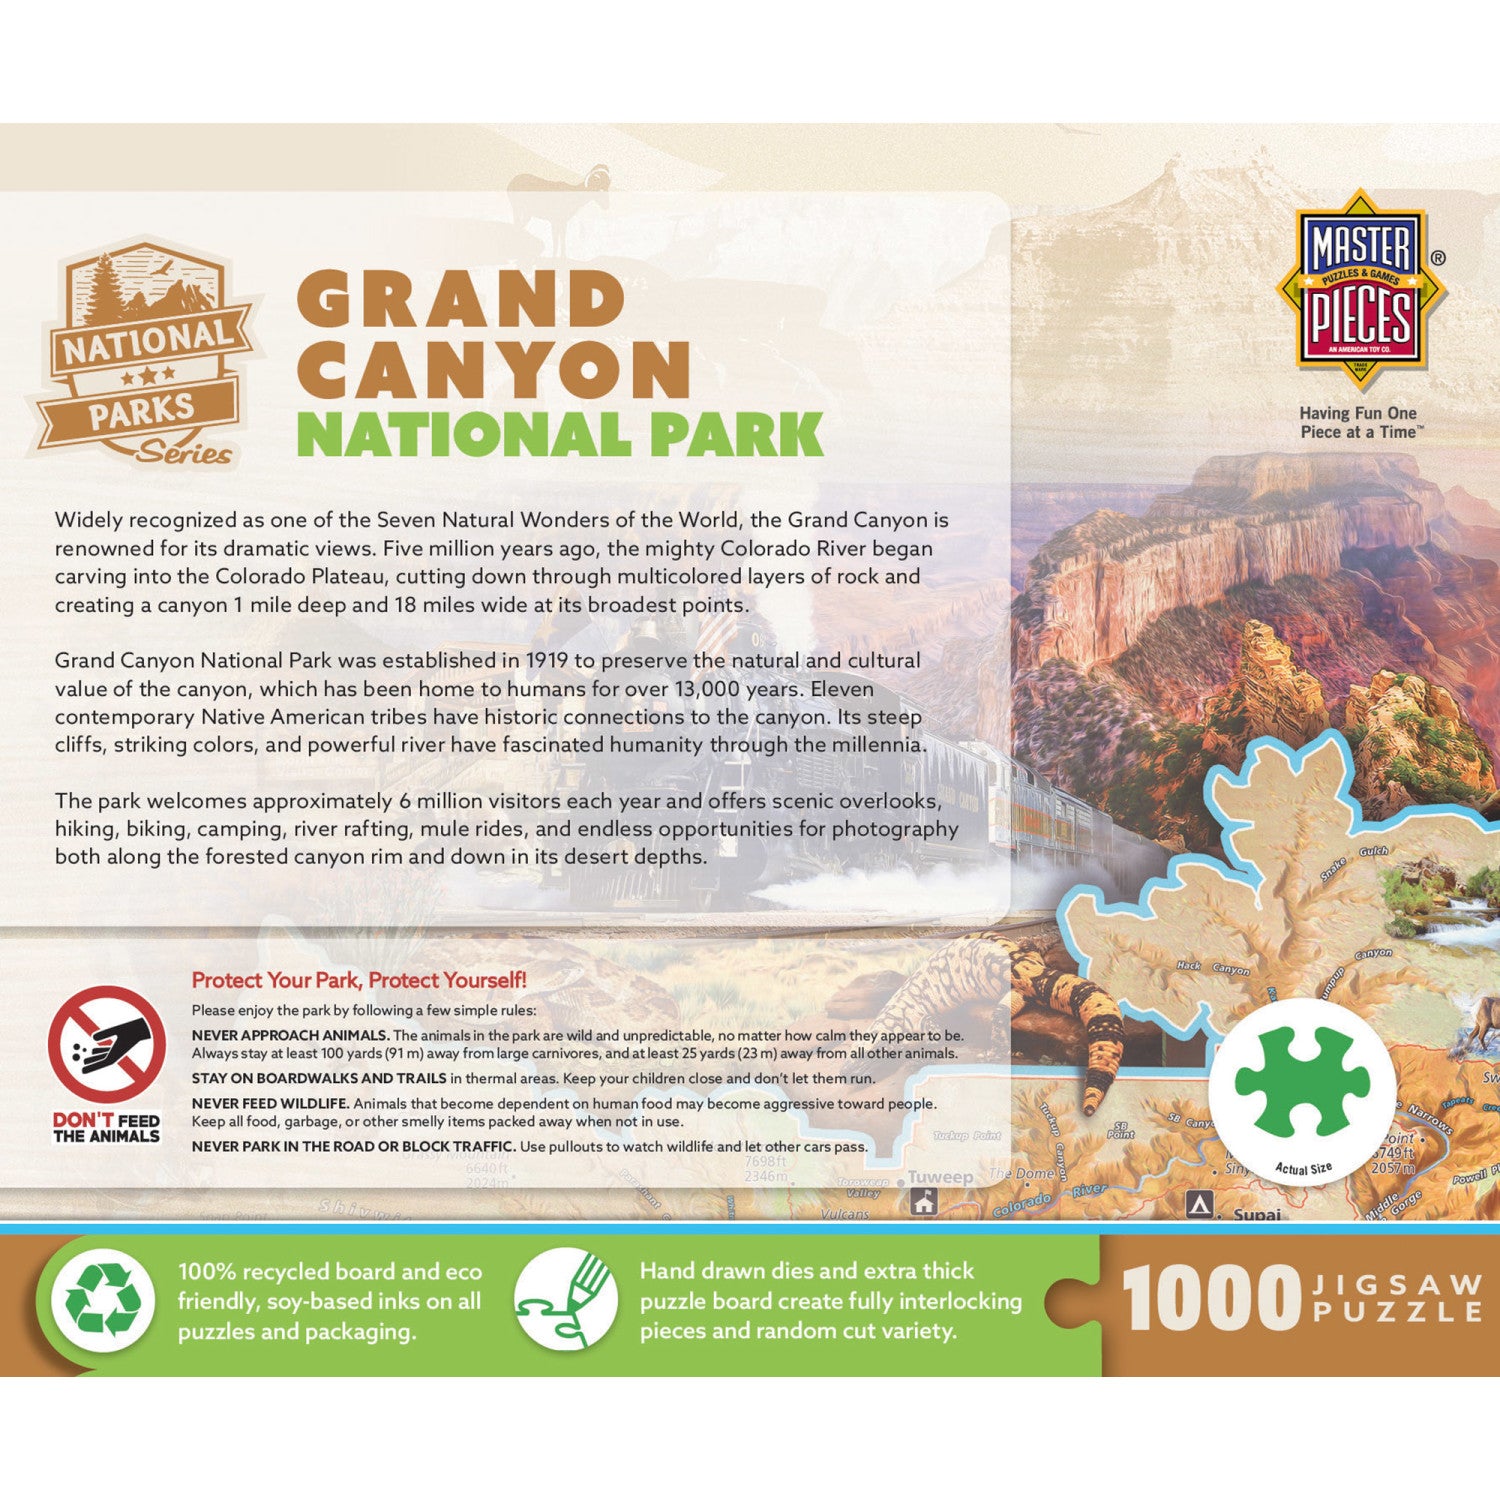 Grand Canyon National Park 1000 Piece Puzzle